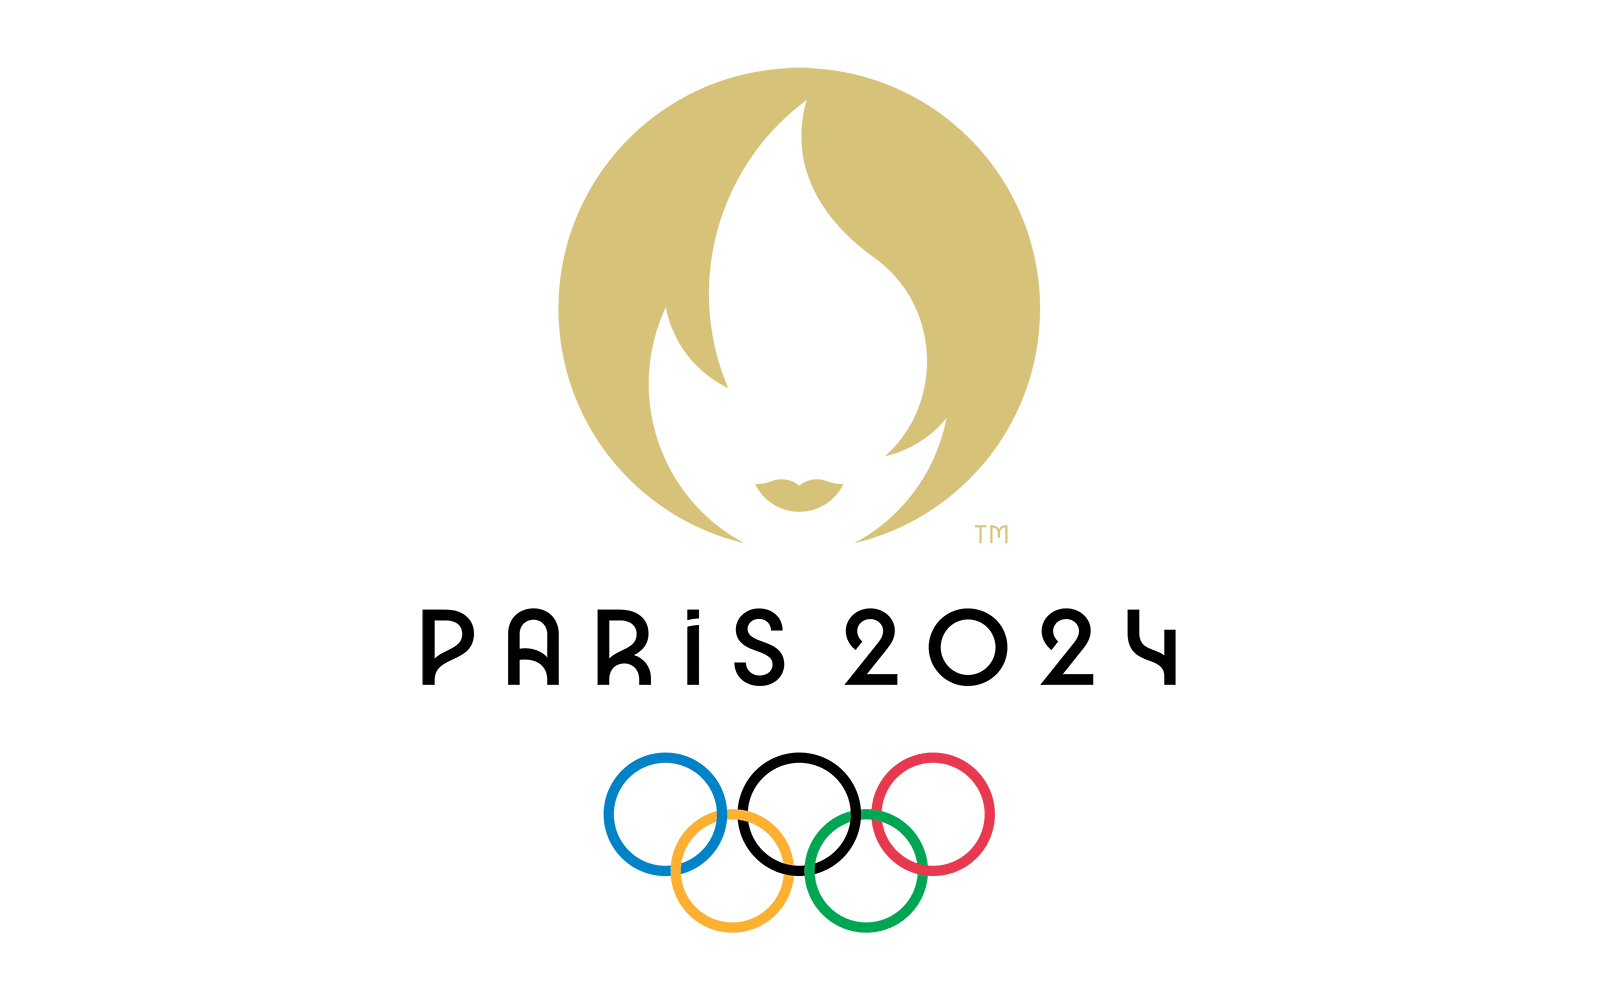 Paris France - Summer Olympics 2024 logo